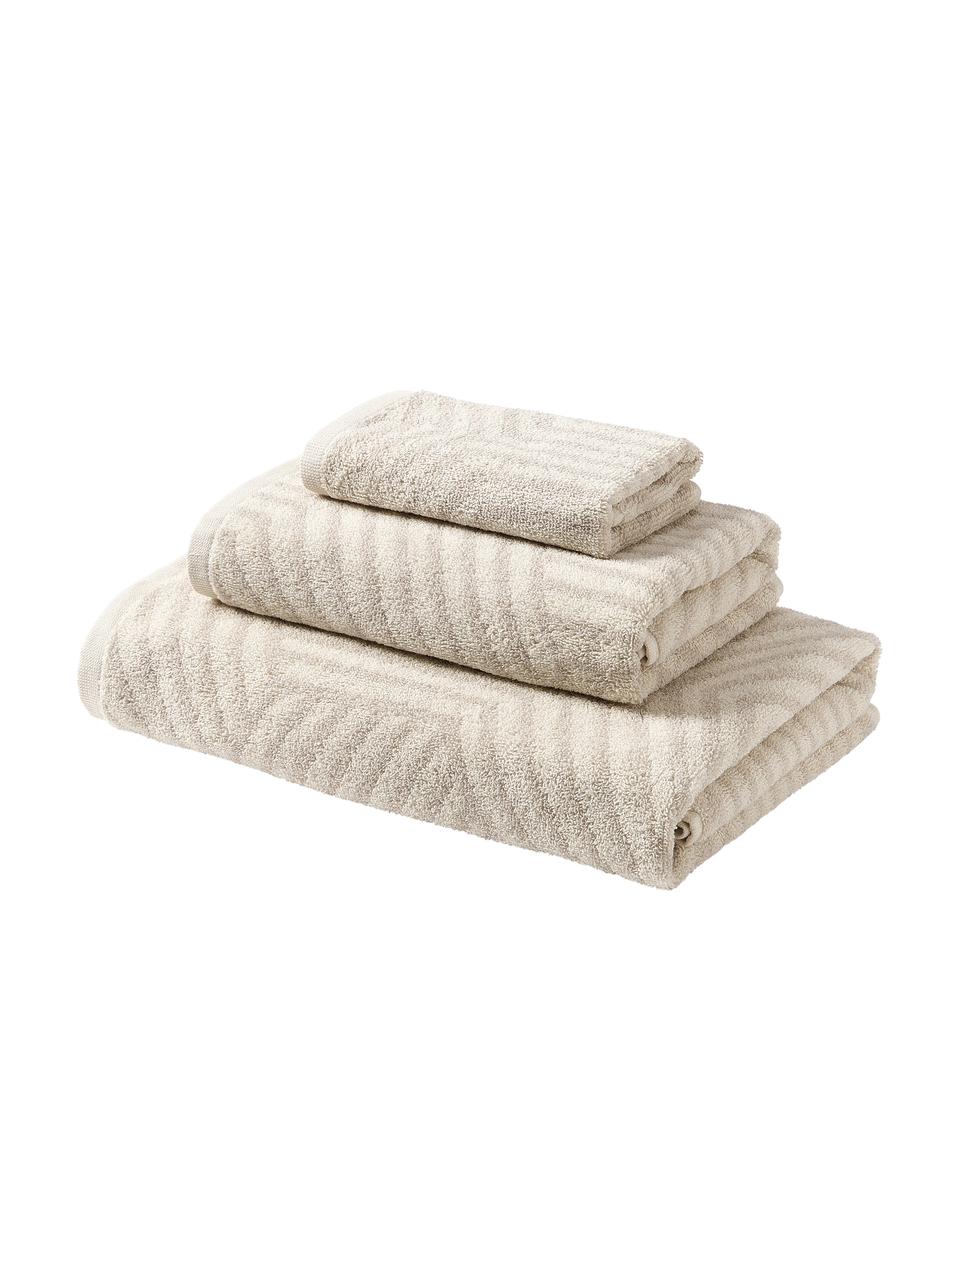 Set de toallas Fatu, 3 uds., Tonos beige, Set de diferentes tamaños